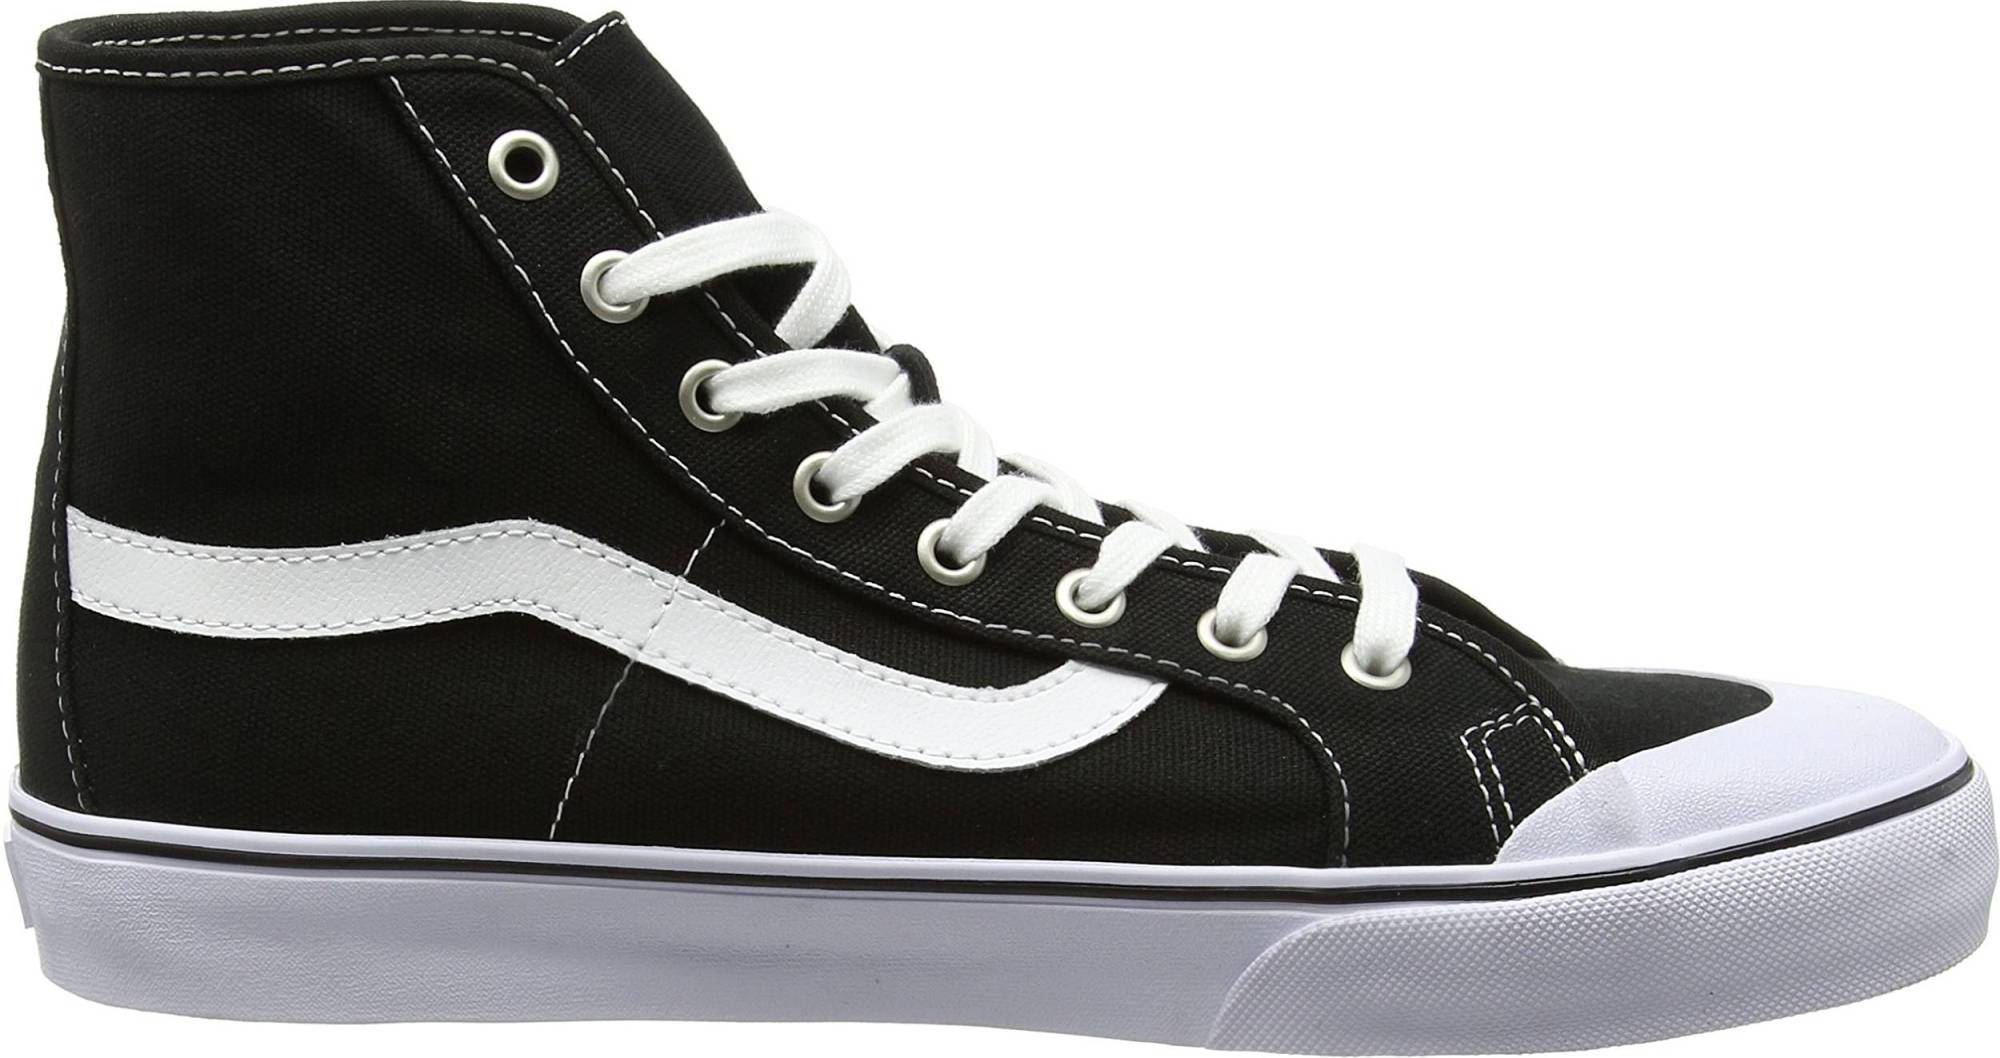 Vans Black Ball Hi SF – Shoes Reviews & Reasons To Buy